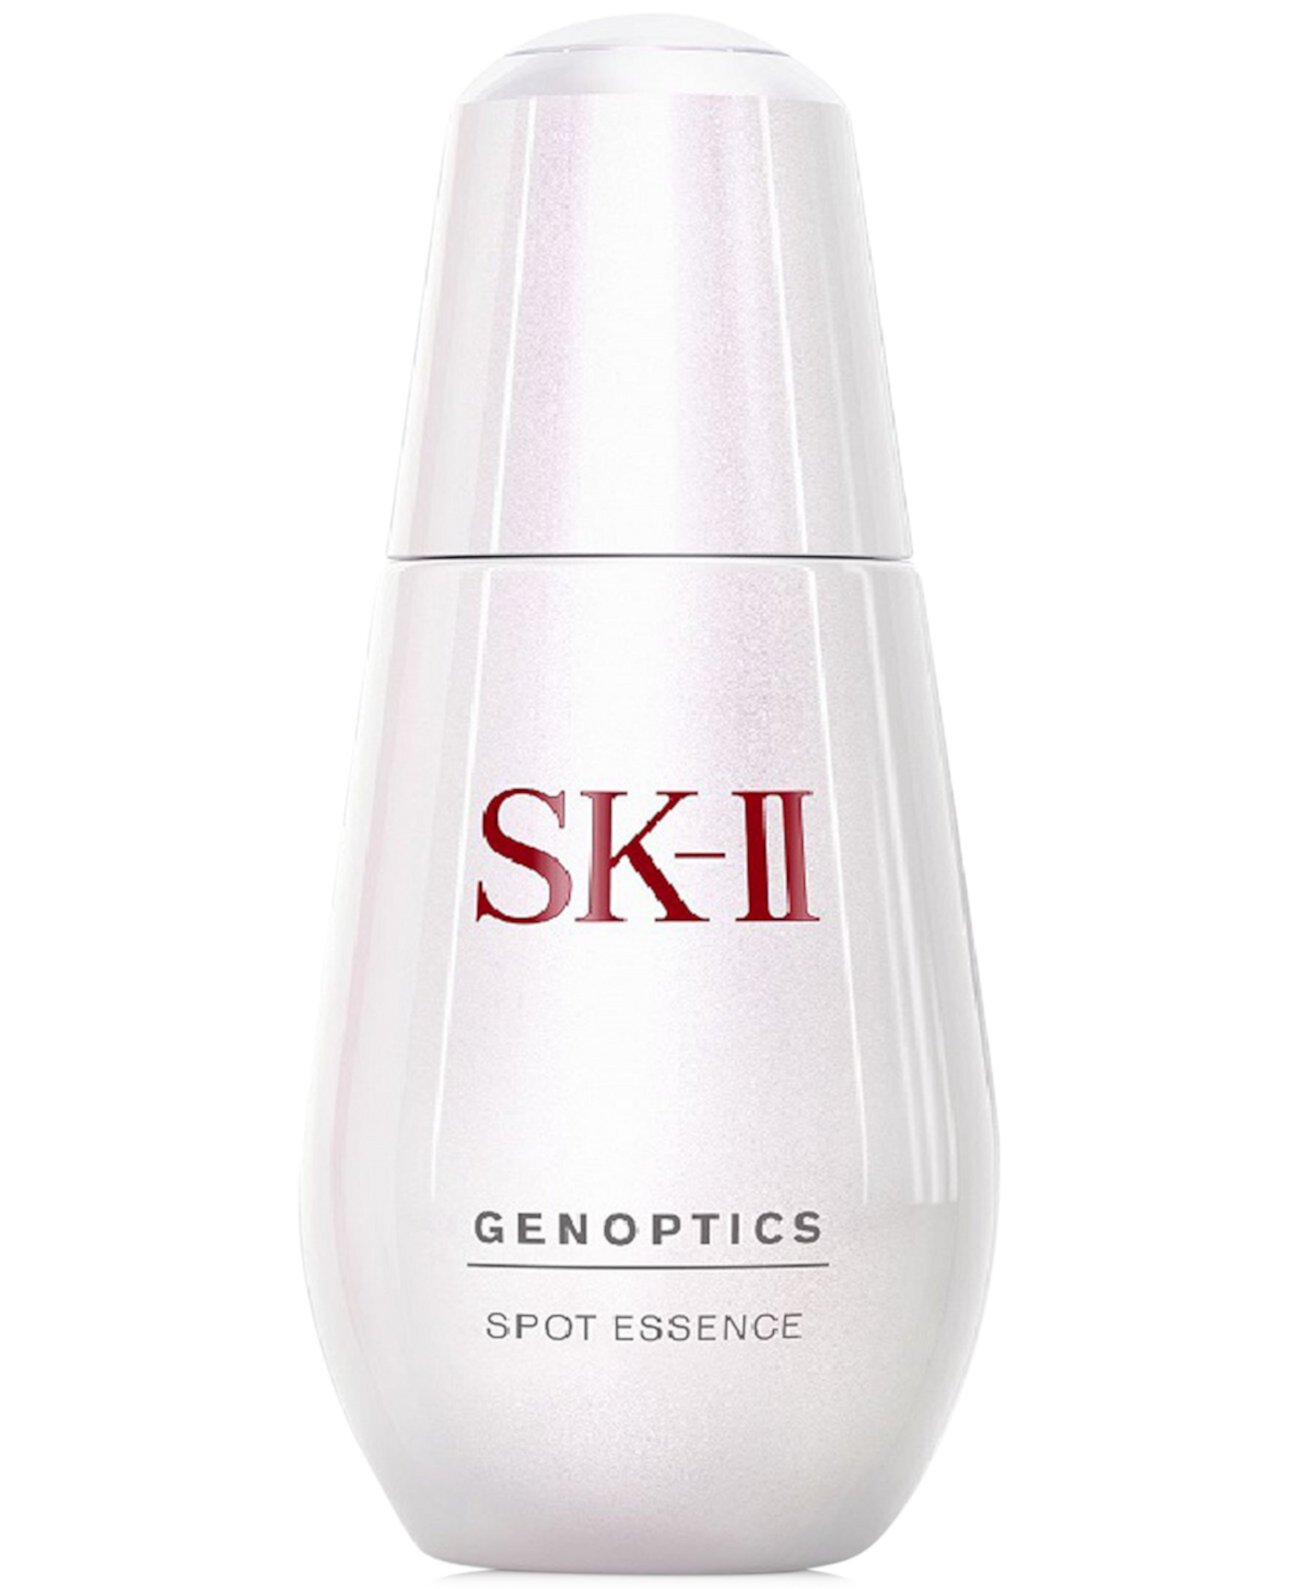 GenOptics Spot Essence, 1.6 унции. SK-II